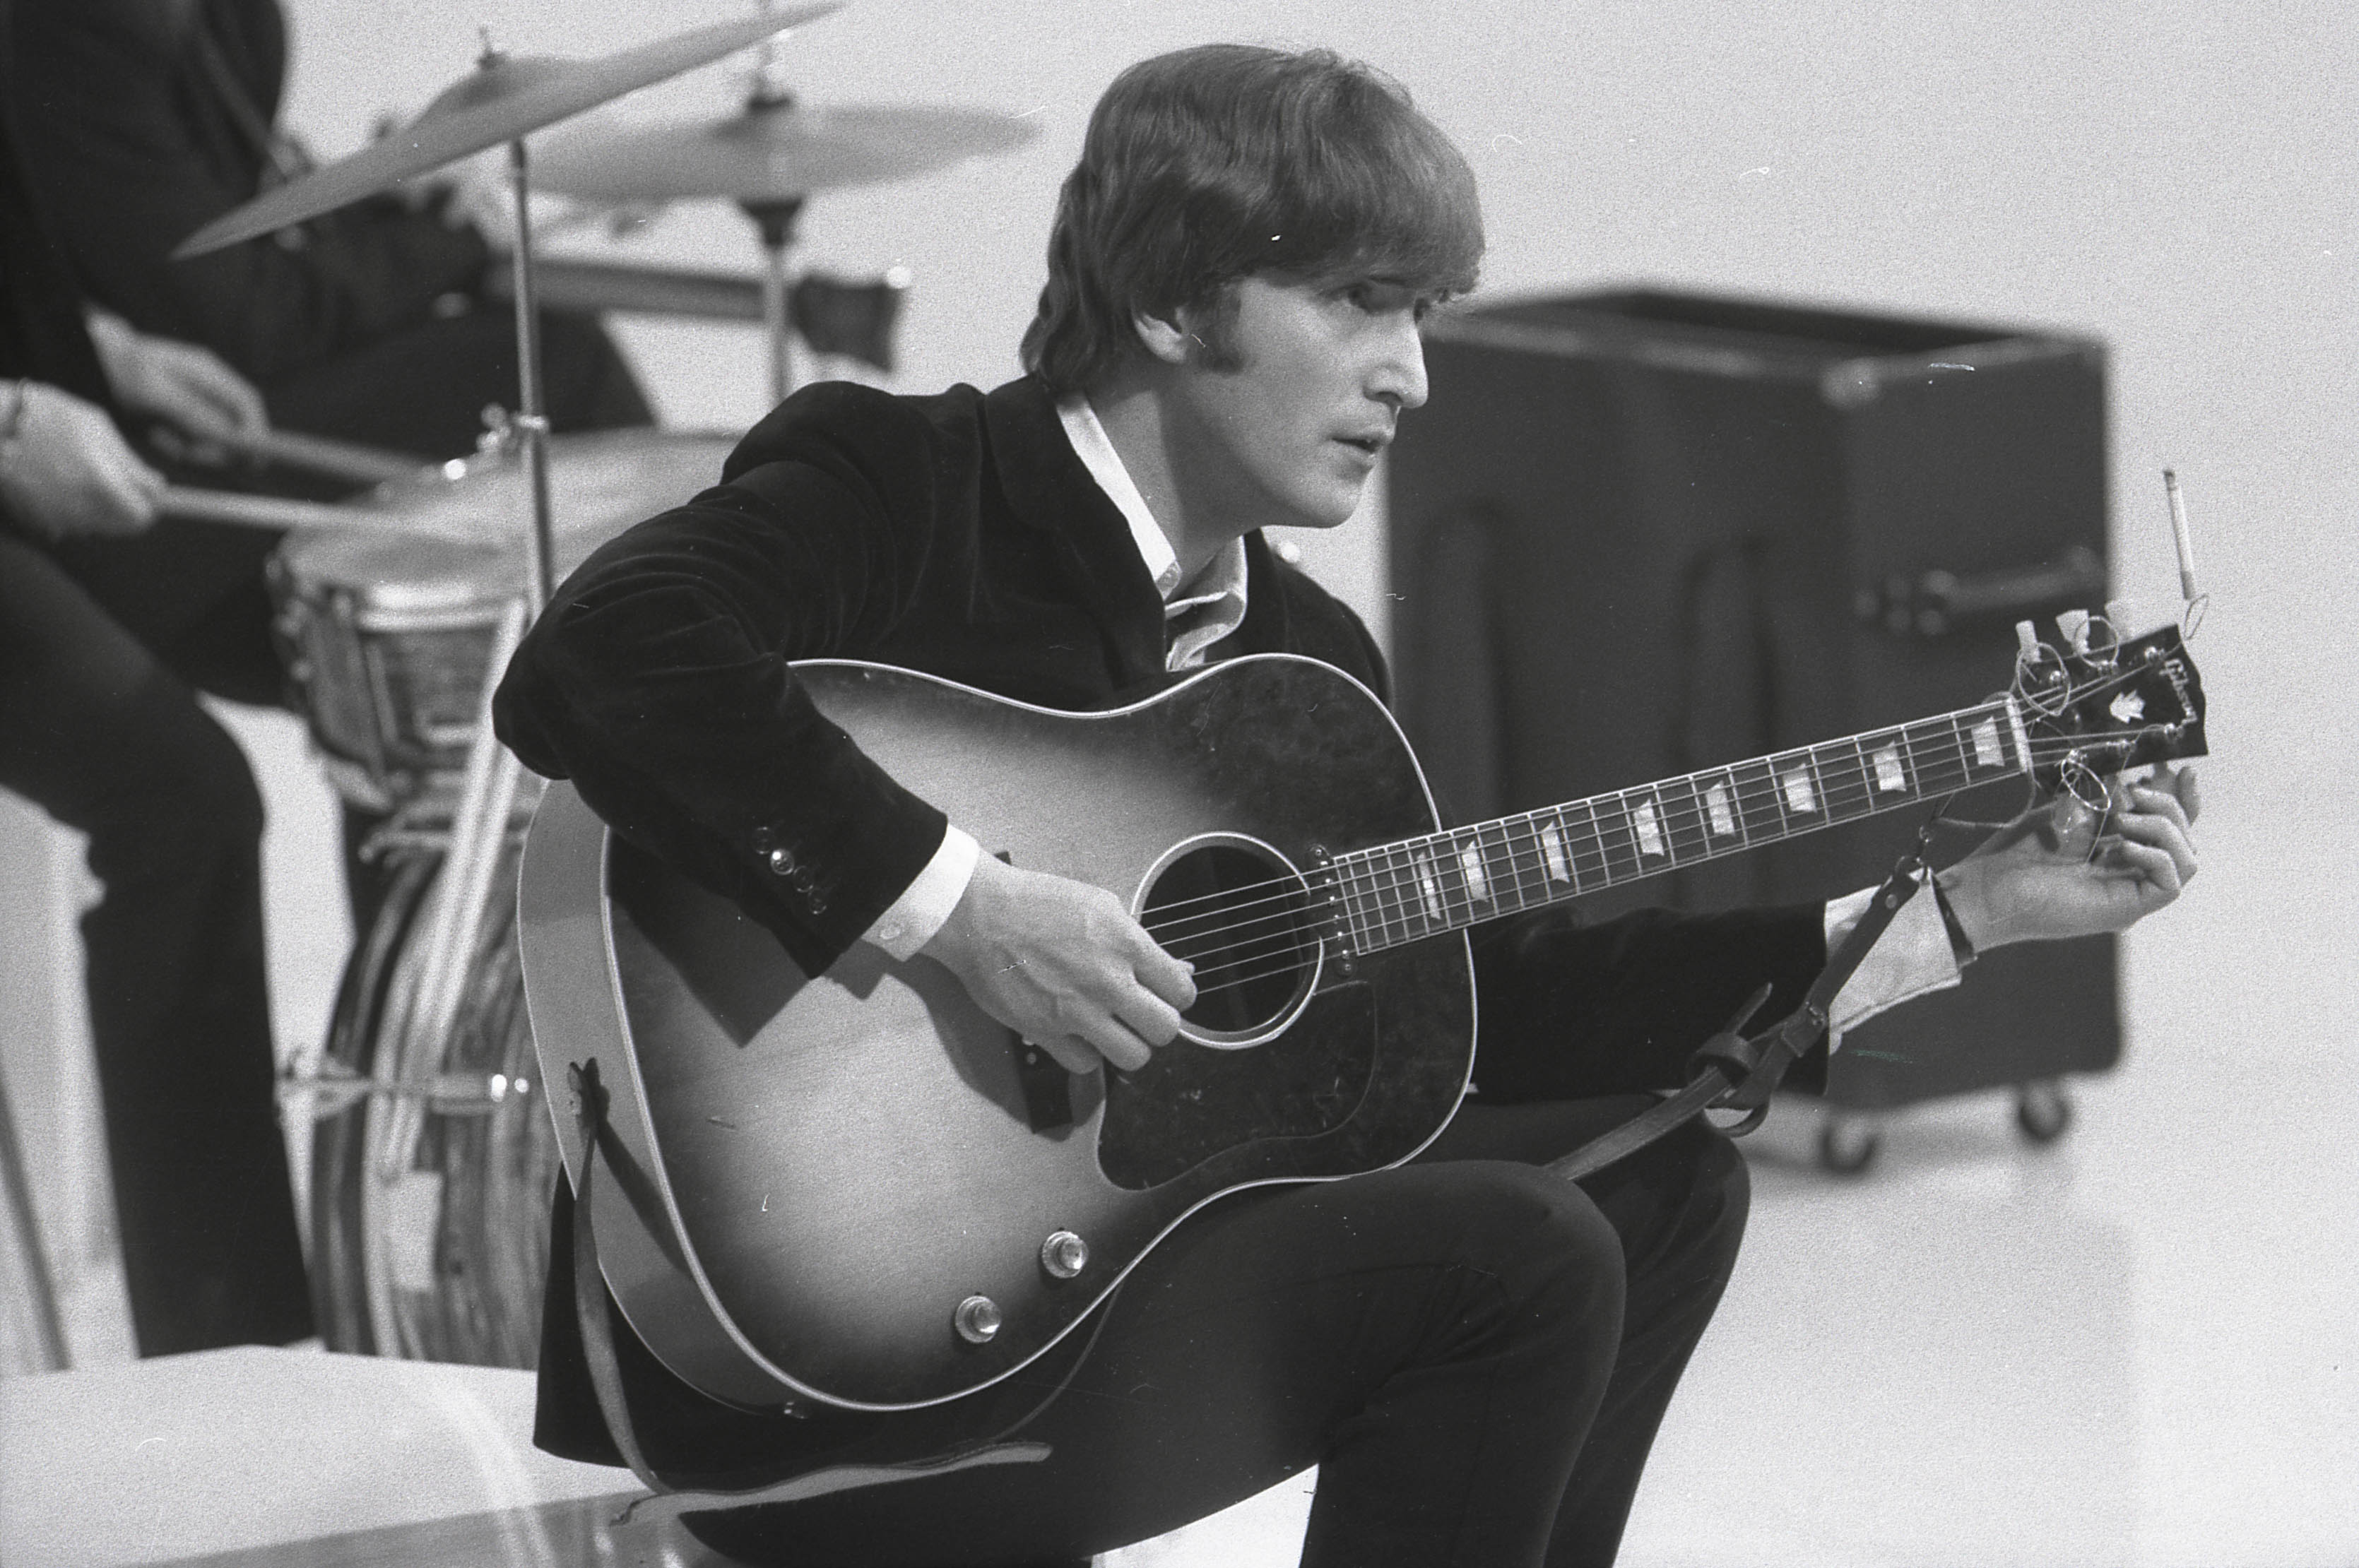 The Beatles' John Lennon holding a guitar